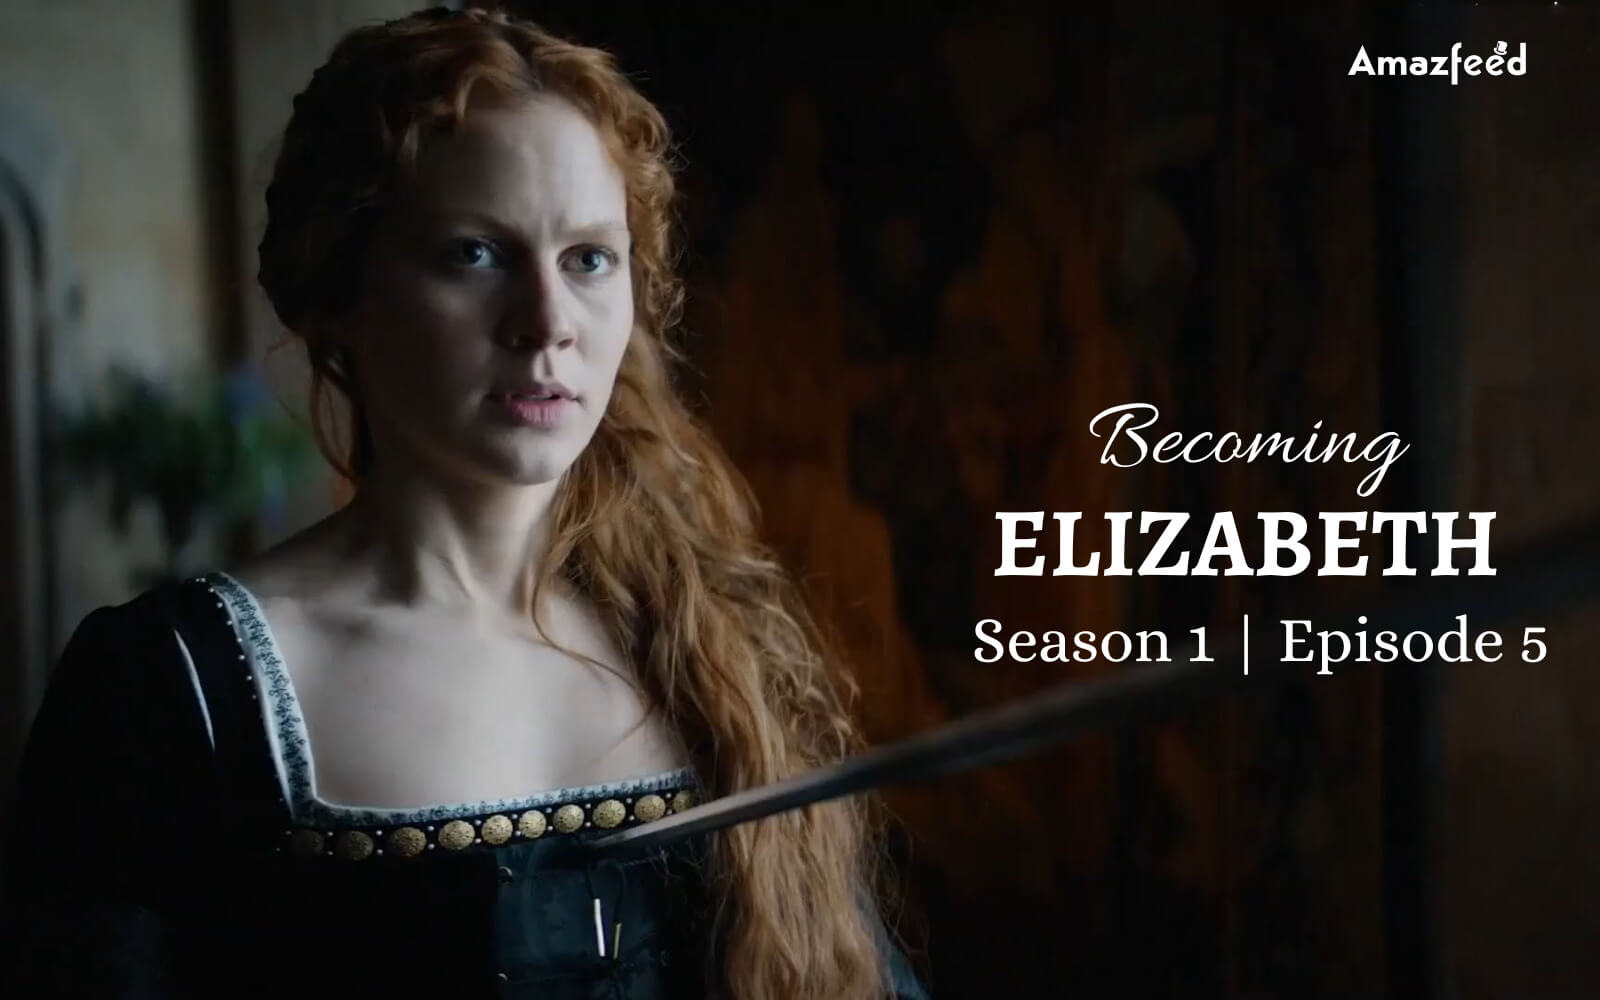 Becoming Elizabeth Season 1 Episode 5 Release date